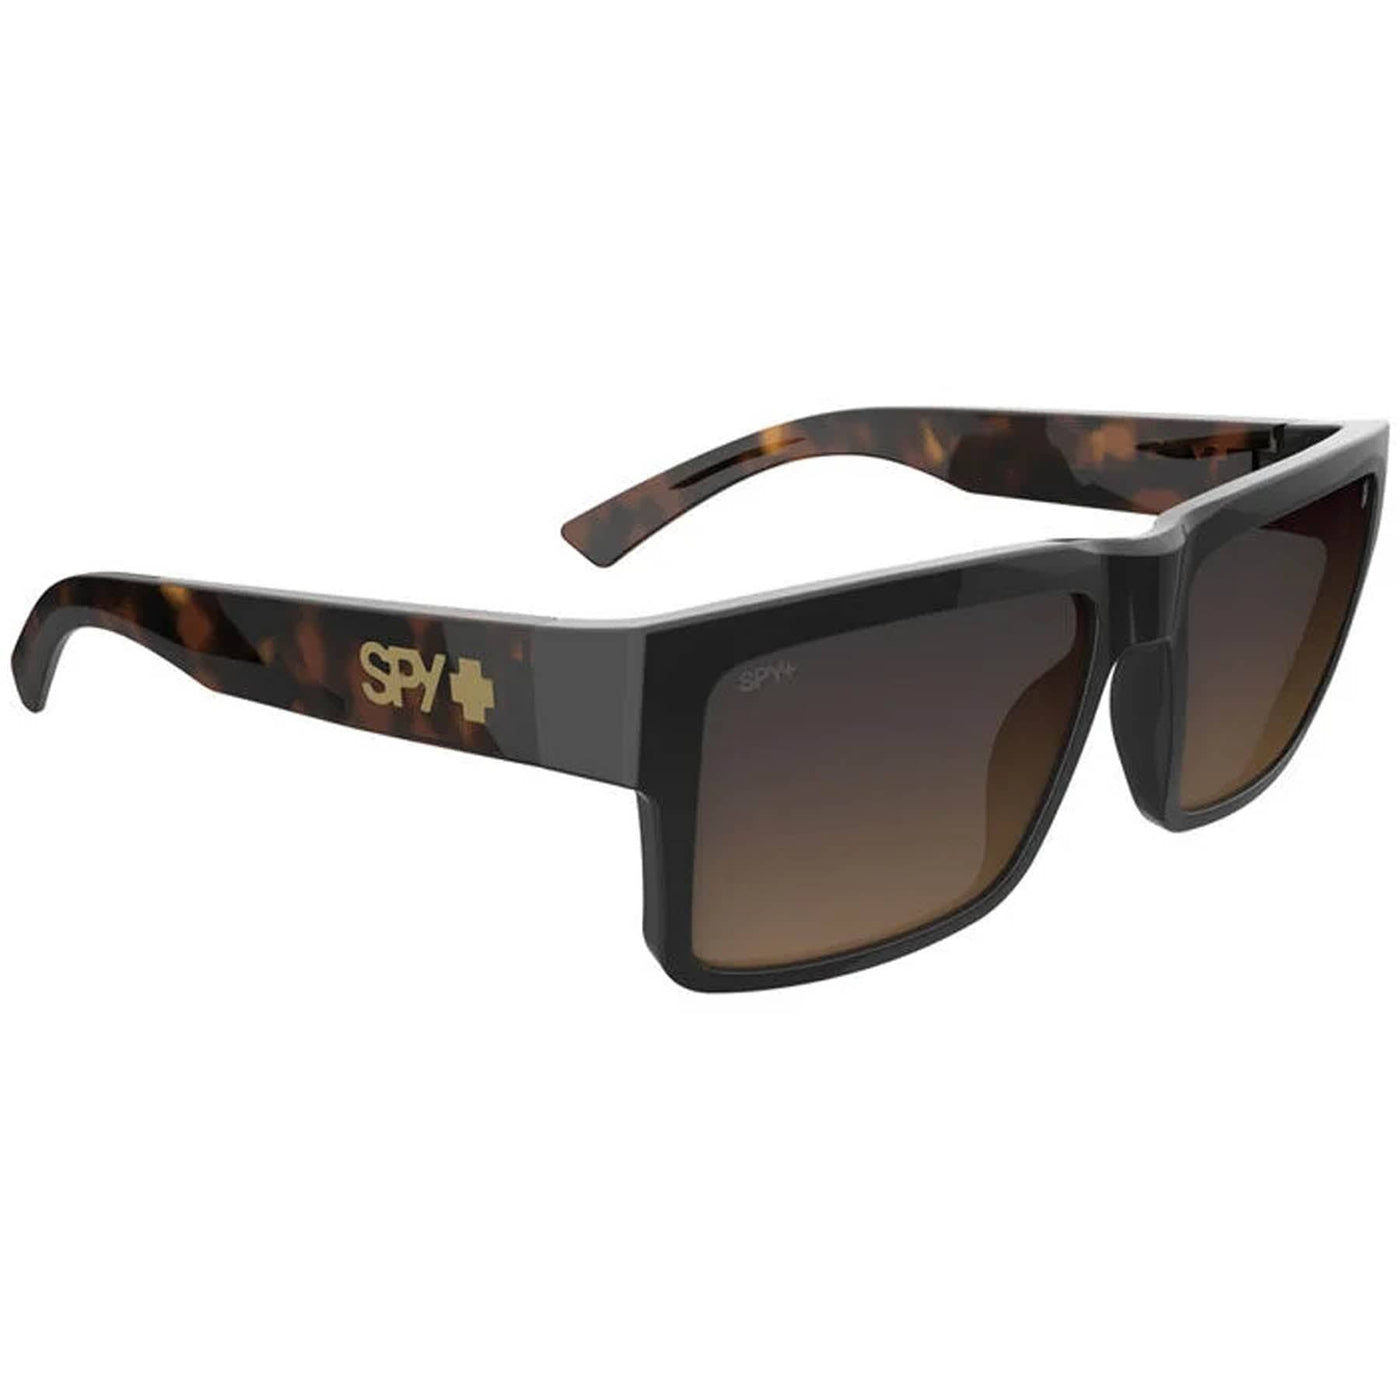 SPY MONTANA Sunglasses, Happy Lens - Dark Brown Fade 8Lines Shop - Fast Shipping